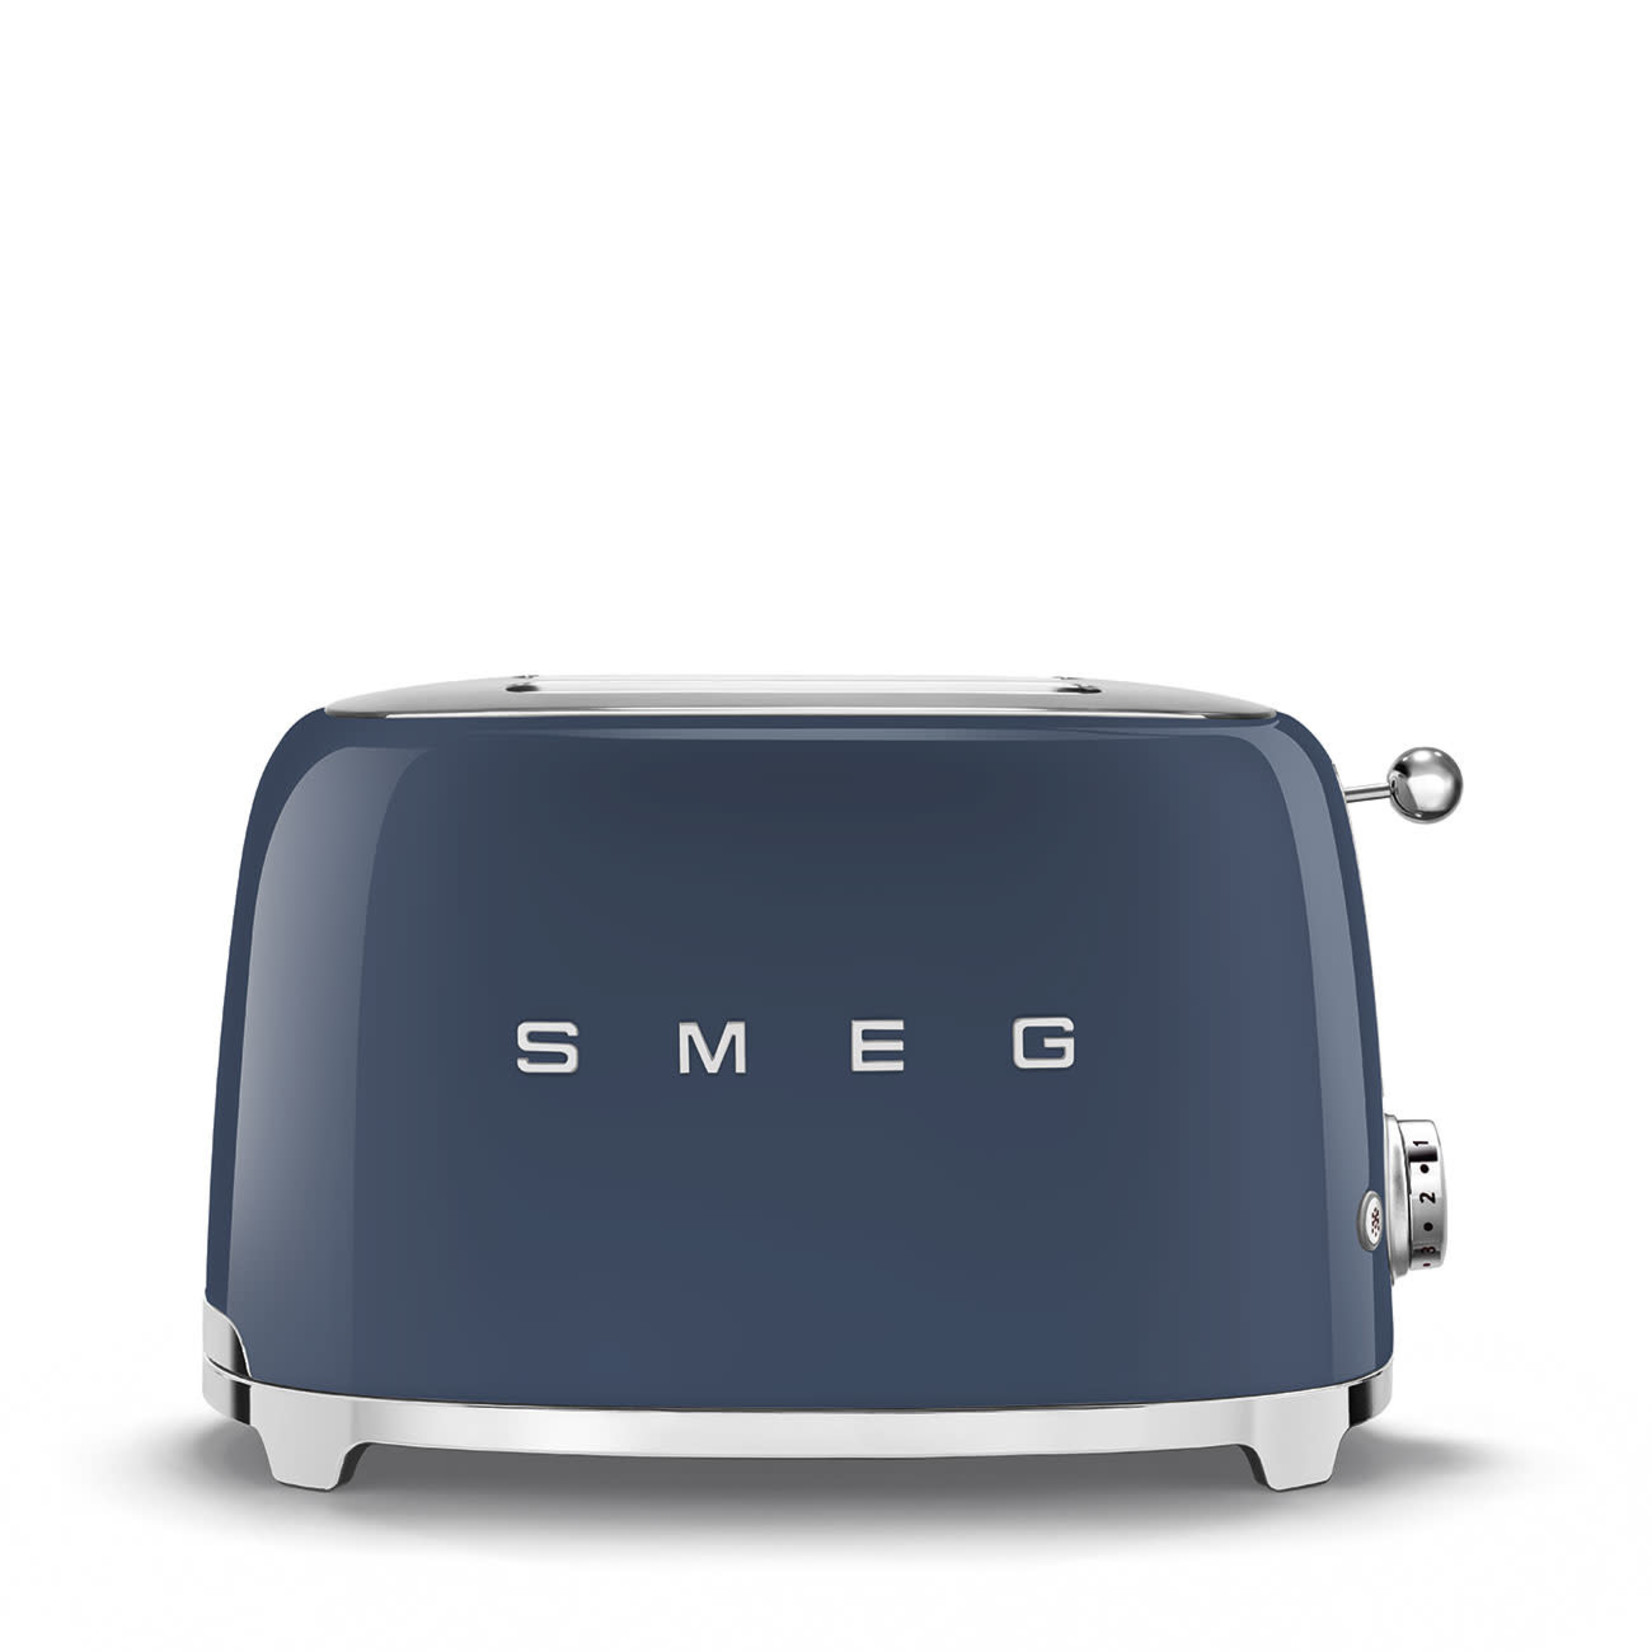 https://cdn.shoplightspeed.com/shops/659299/files/51814780/1652x1652x2/smeg-50s-retro-style-aesthetic-2-slice-toasters.jpg